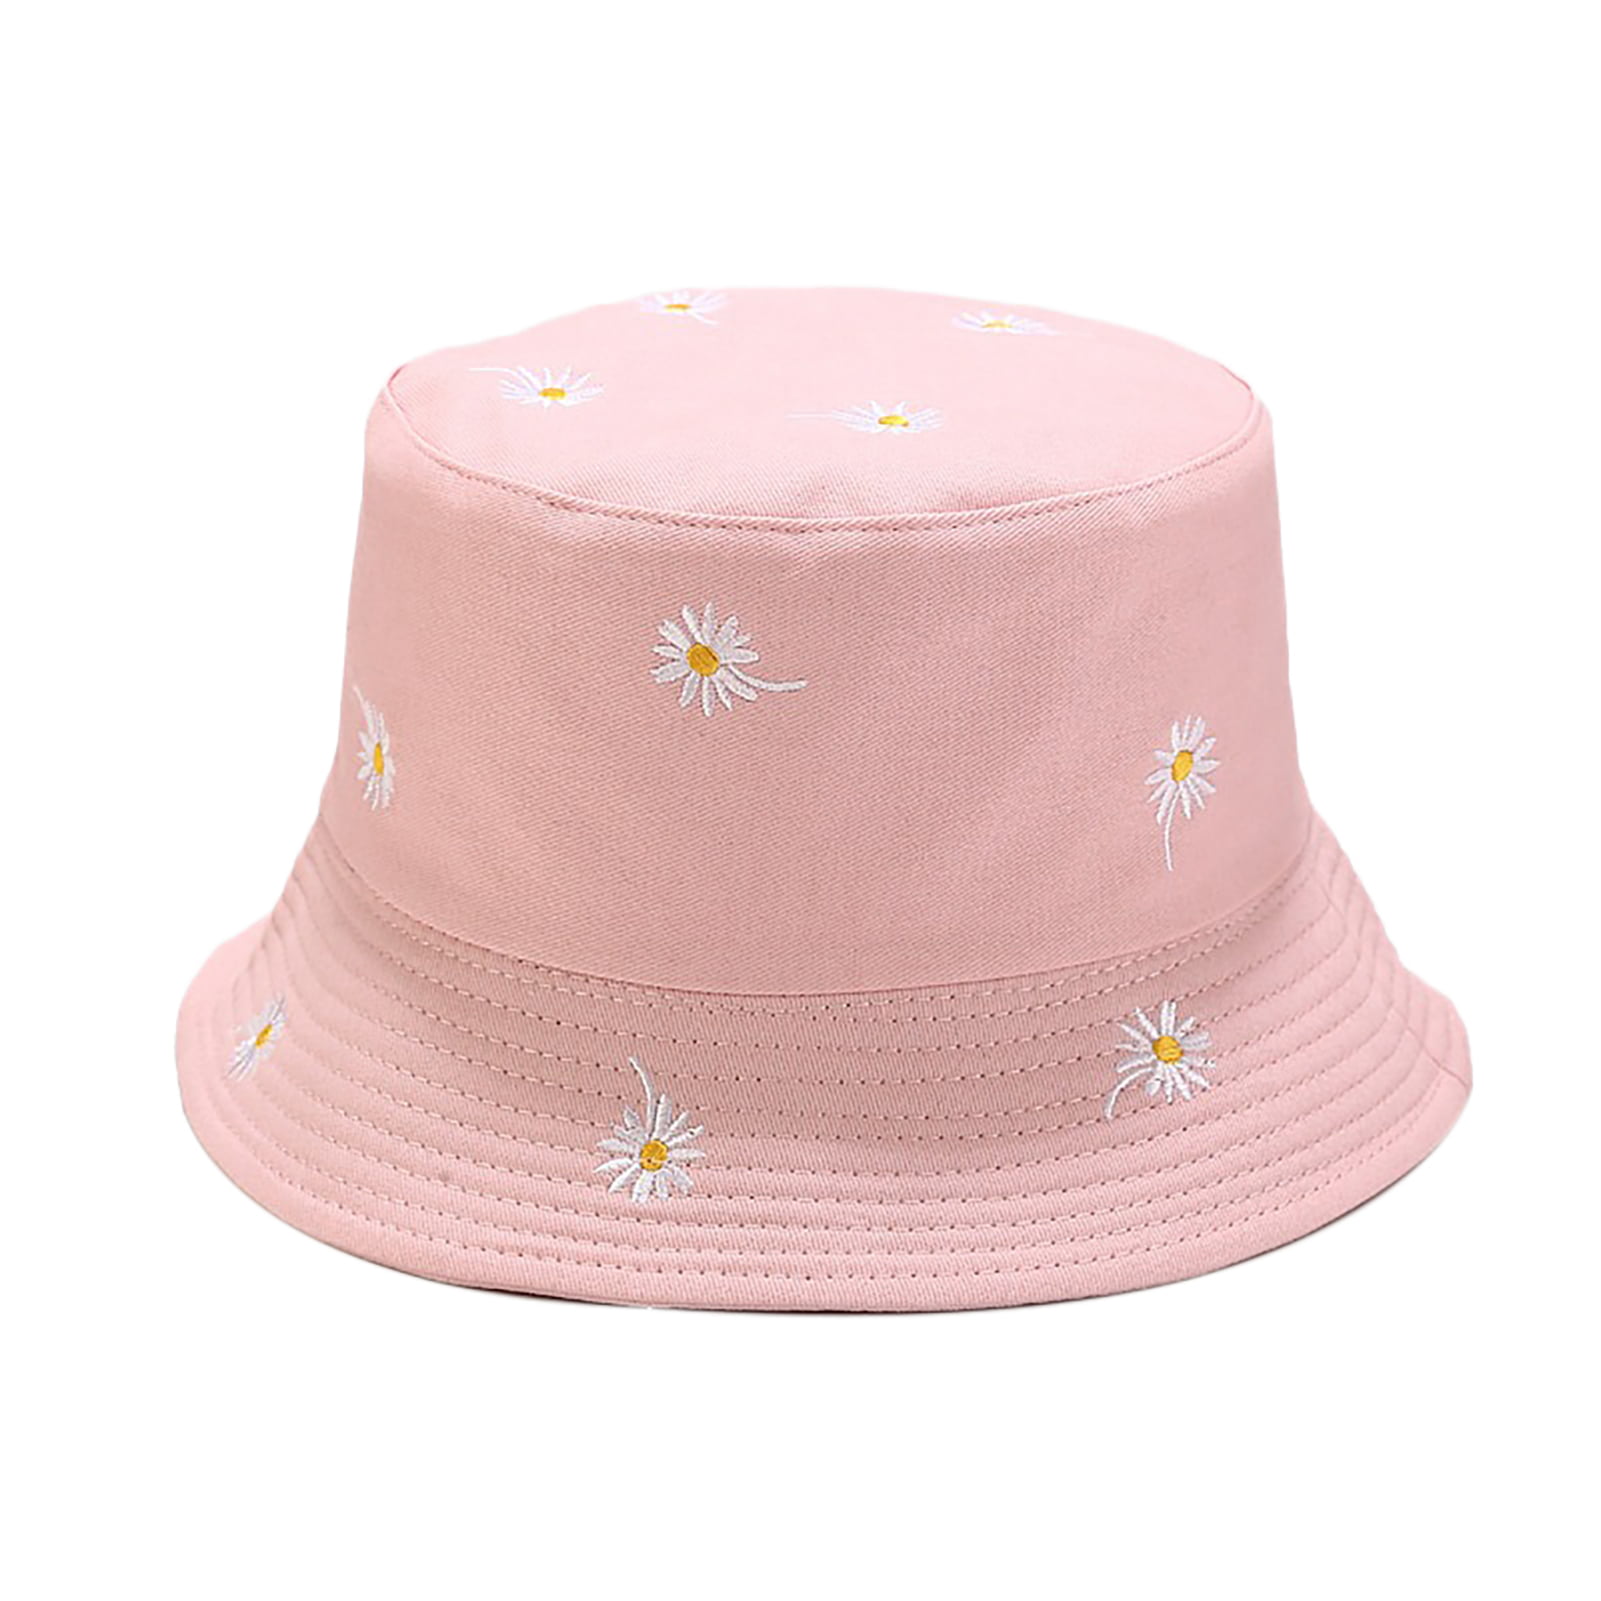 SANWOOD Bucket Hat Pink,Bucket Hat Flower Printed Foldable Solid Color  Women Fisherman Hat for Outdoor